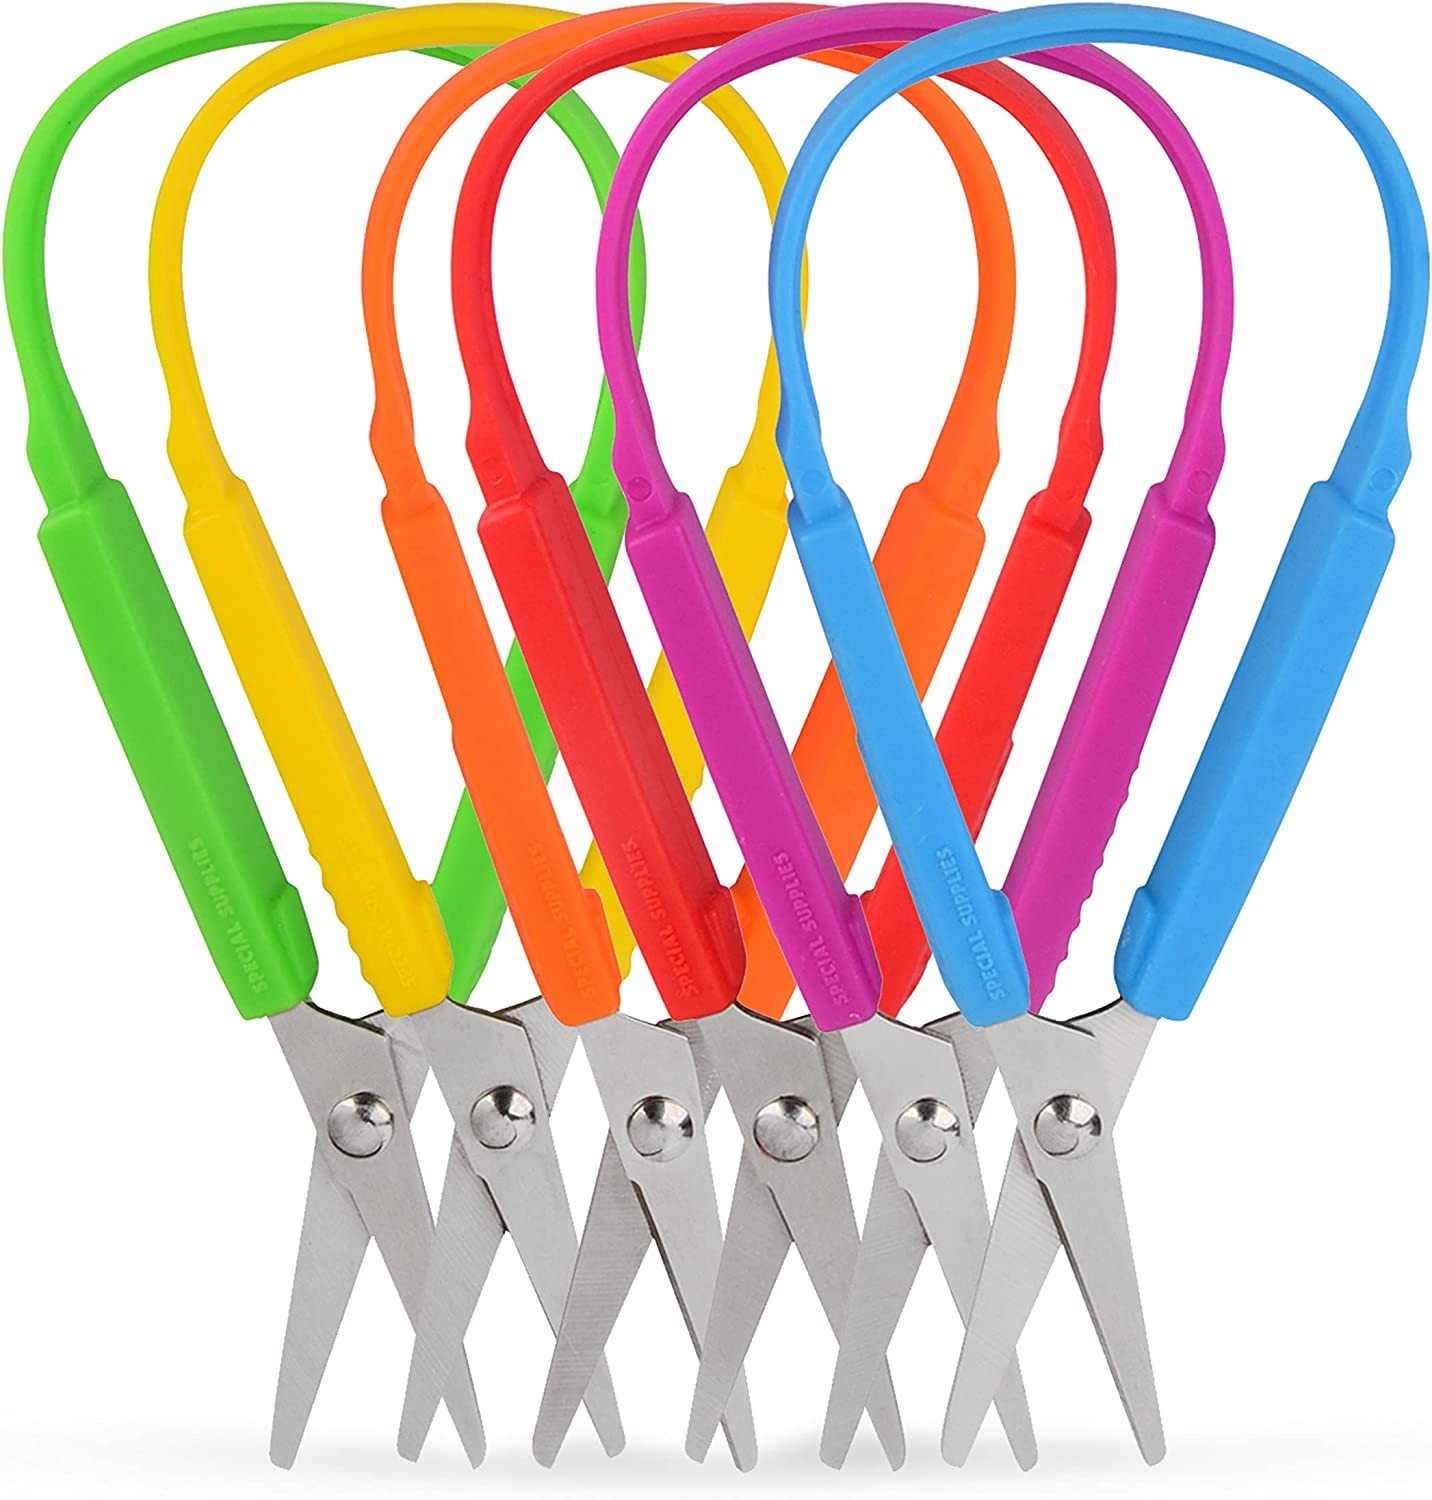 Loop Scissors For Kid, Colorful Looped Scissor, Colorful Self-opening  Adaptive Cutting Scissors